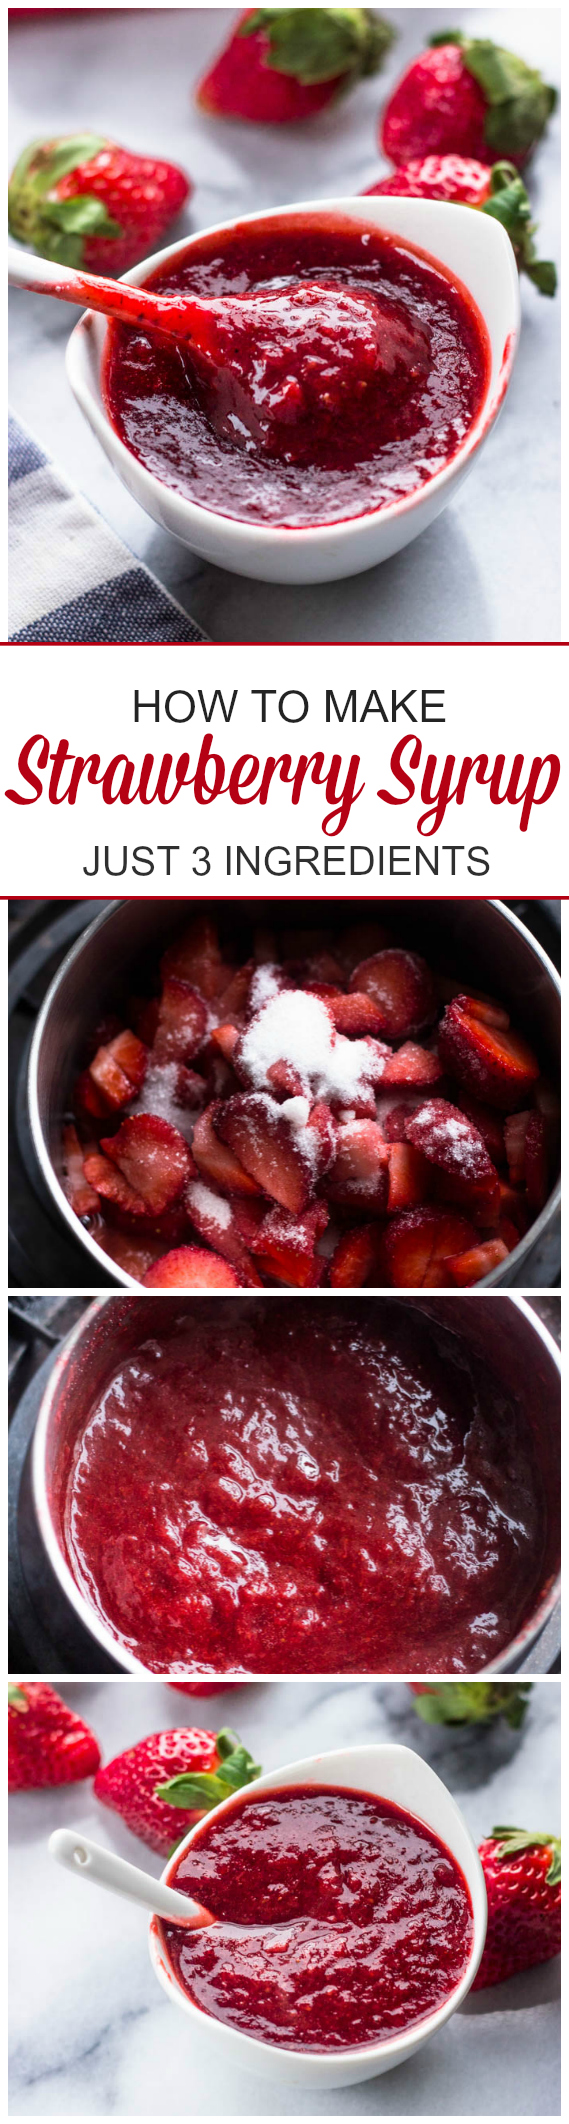 Homemade Strawberry Syrup (Sauce)